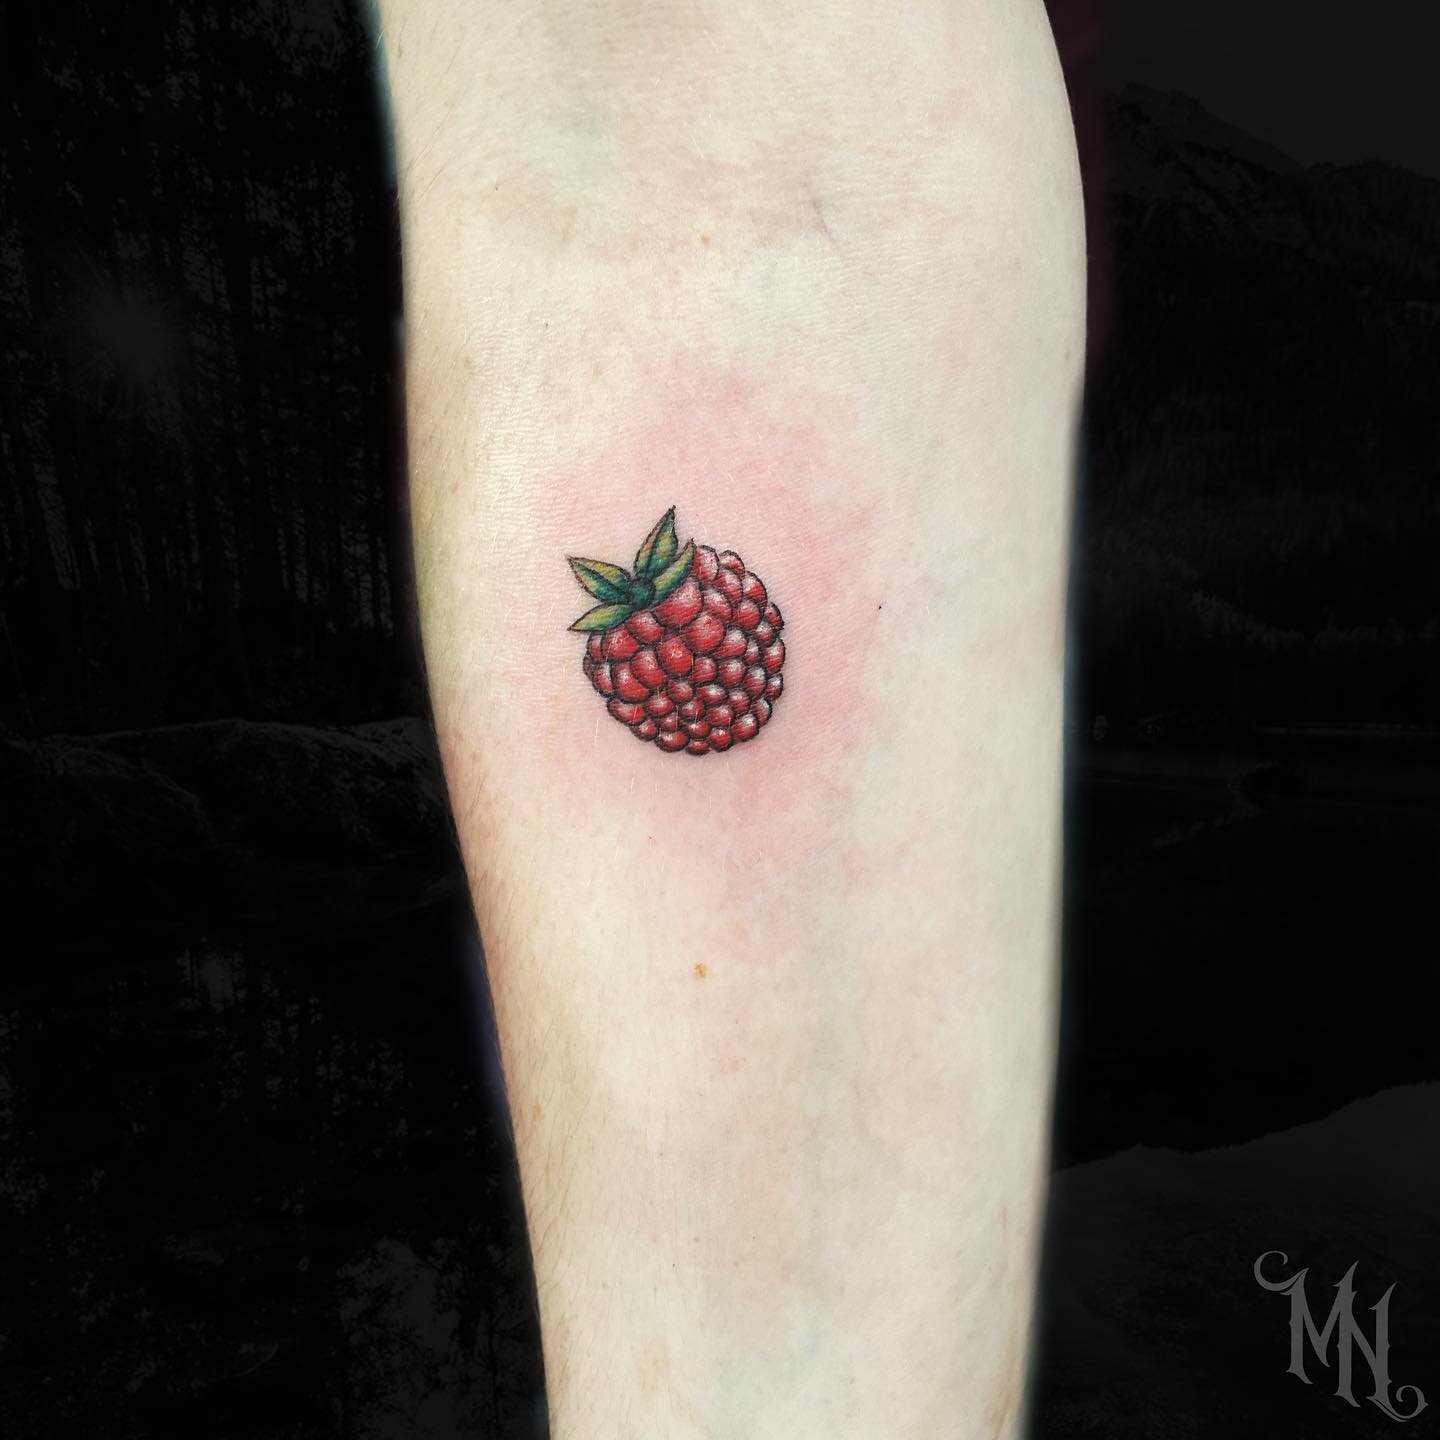 Raspberry tattoo 🍓Call 905 435 7551 for bookings and inquiries #raspberry #raspberrytattoo #tattoo #colortattoo #colourtattoo #whitby #oshawa #durham #tattooartist #tattooideas #cutetattoos